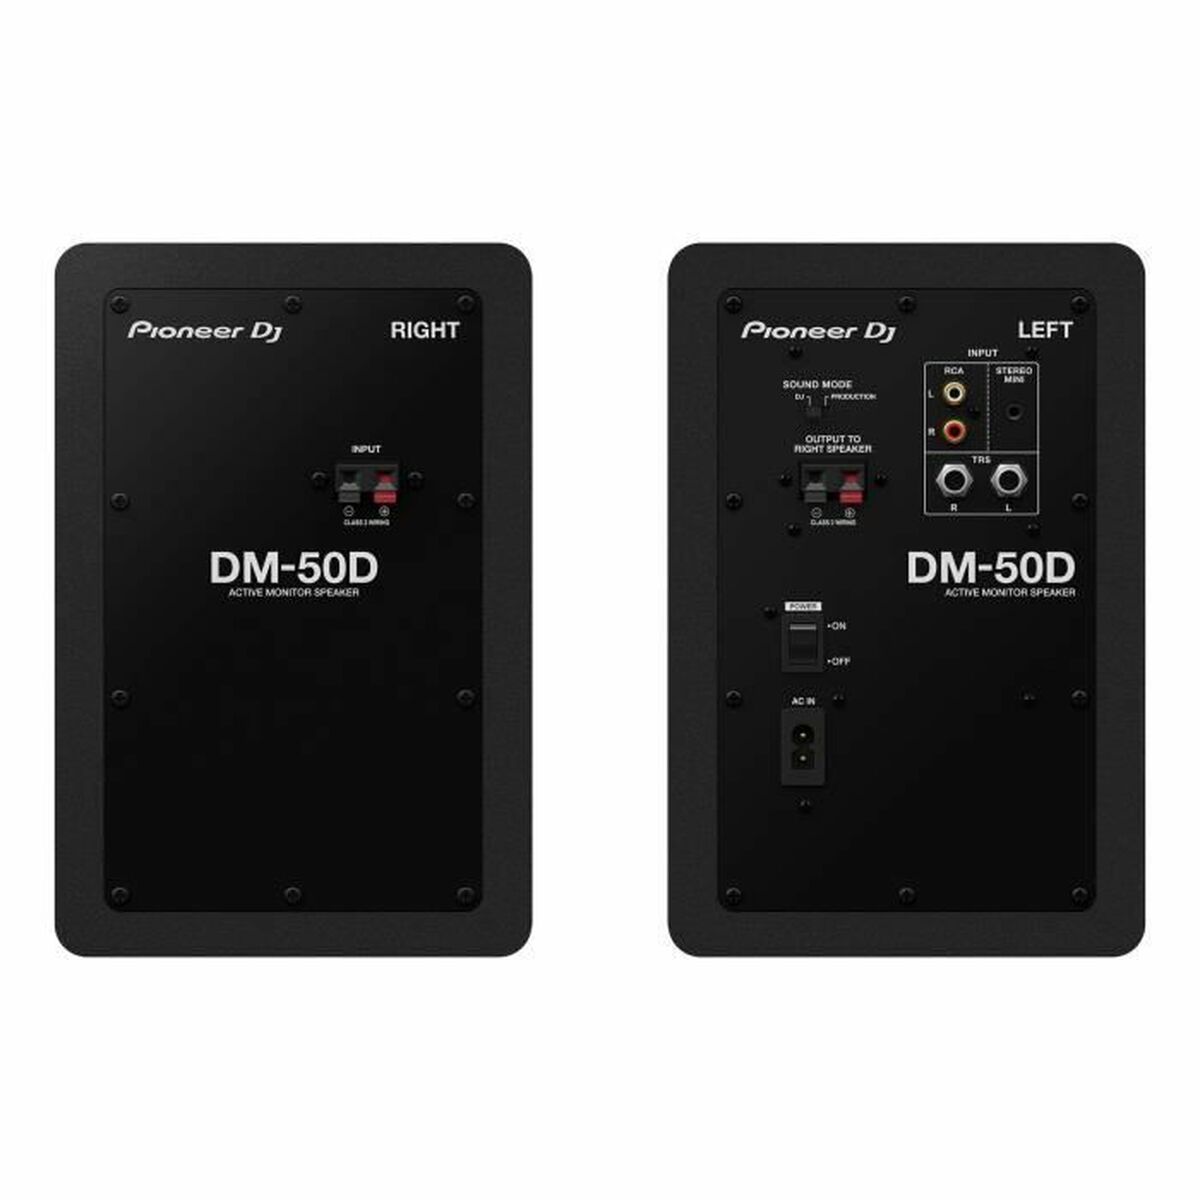 Haut-parleurs Pioneer DJ DM-50D